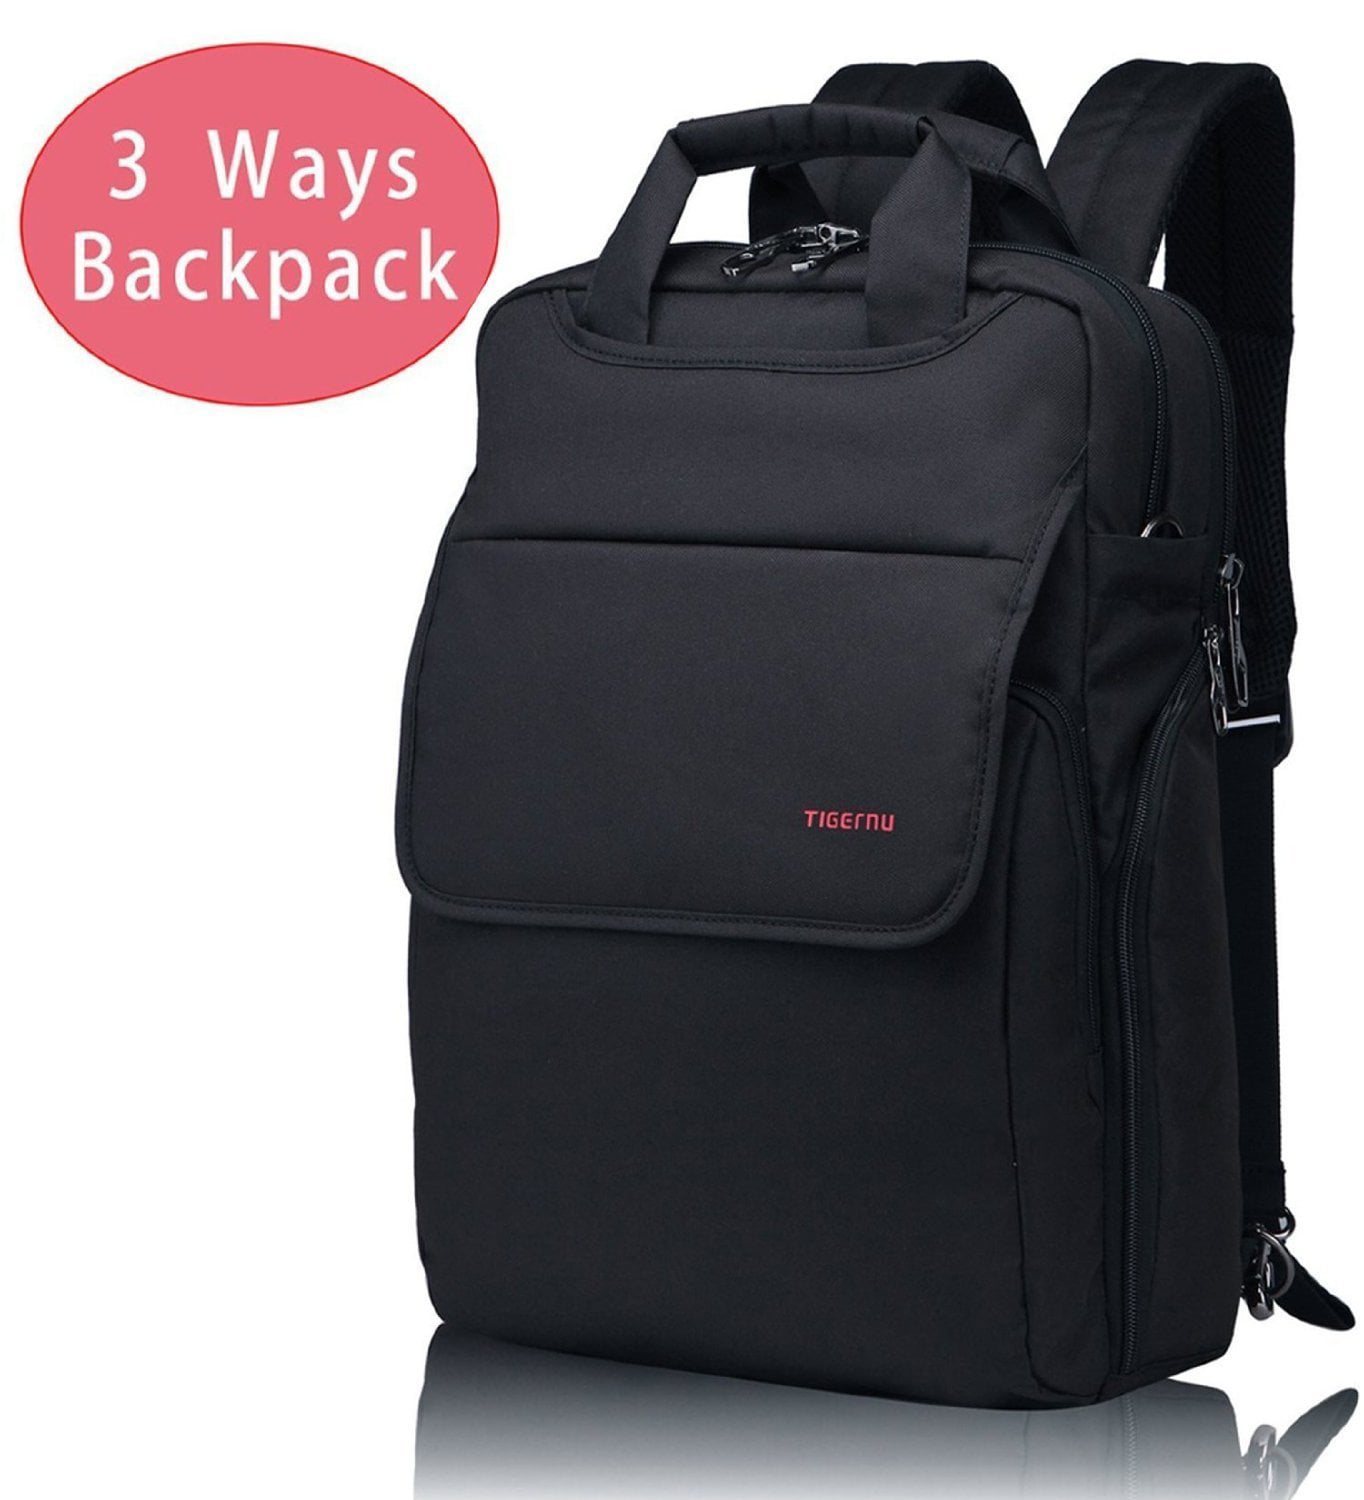 Travel Backpack Laptop Bag Ice Cream Vivid Penguin Fits for Computer Notebook Tablet Under 14 inch Business College School Adjustable Straps for Unisex Adult